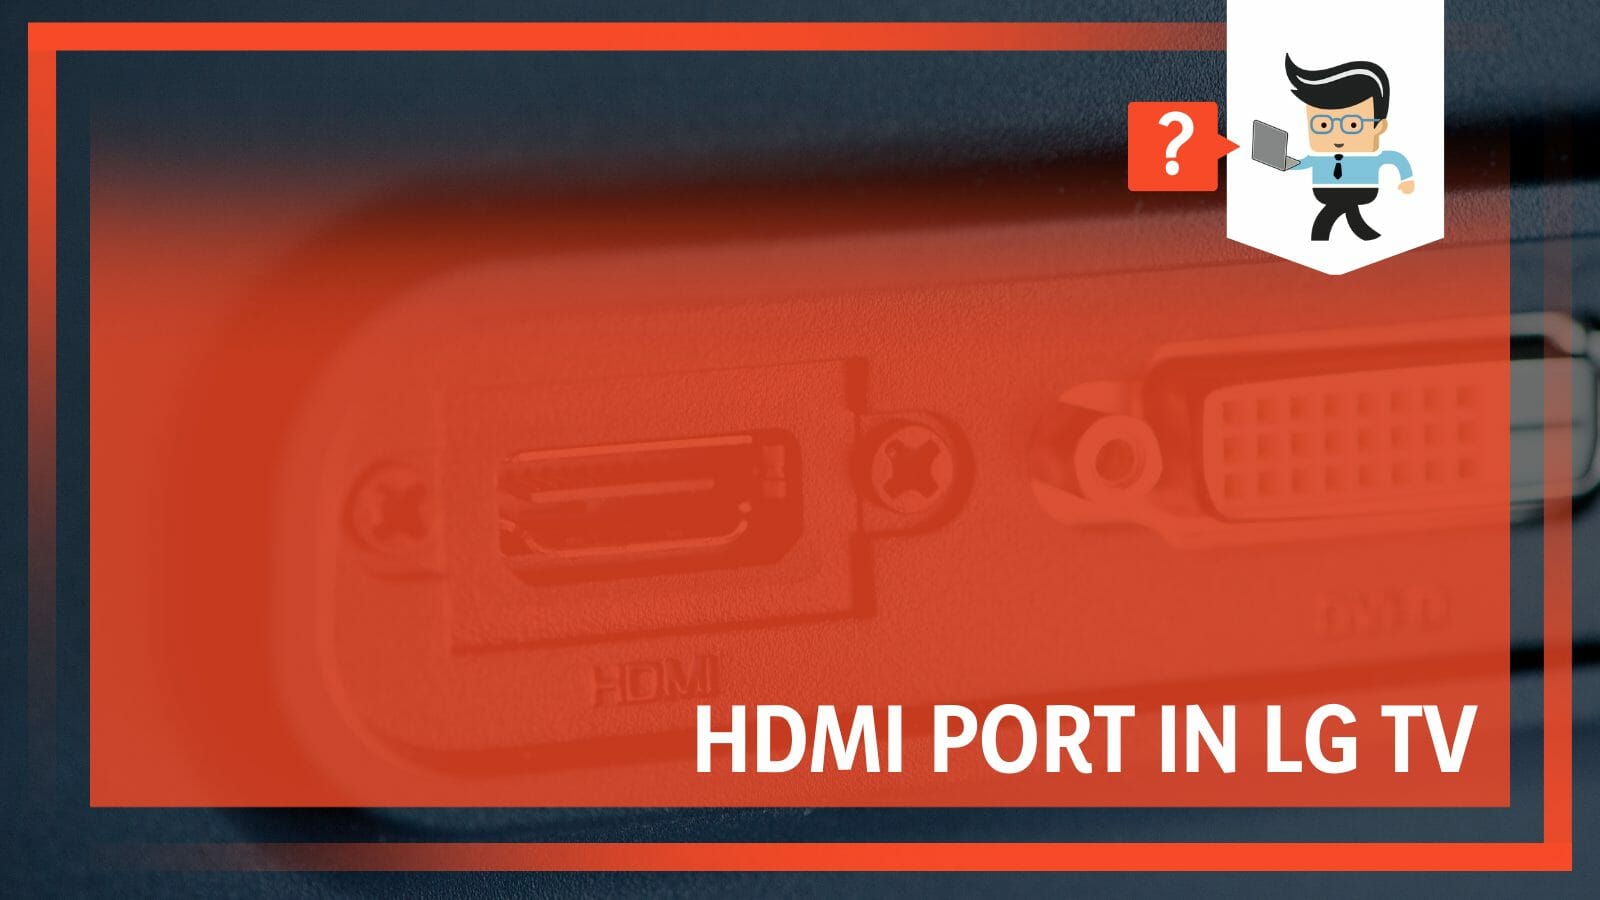 HDMI Port in LG TV